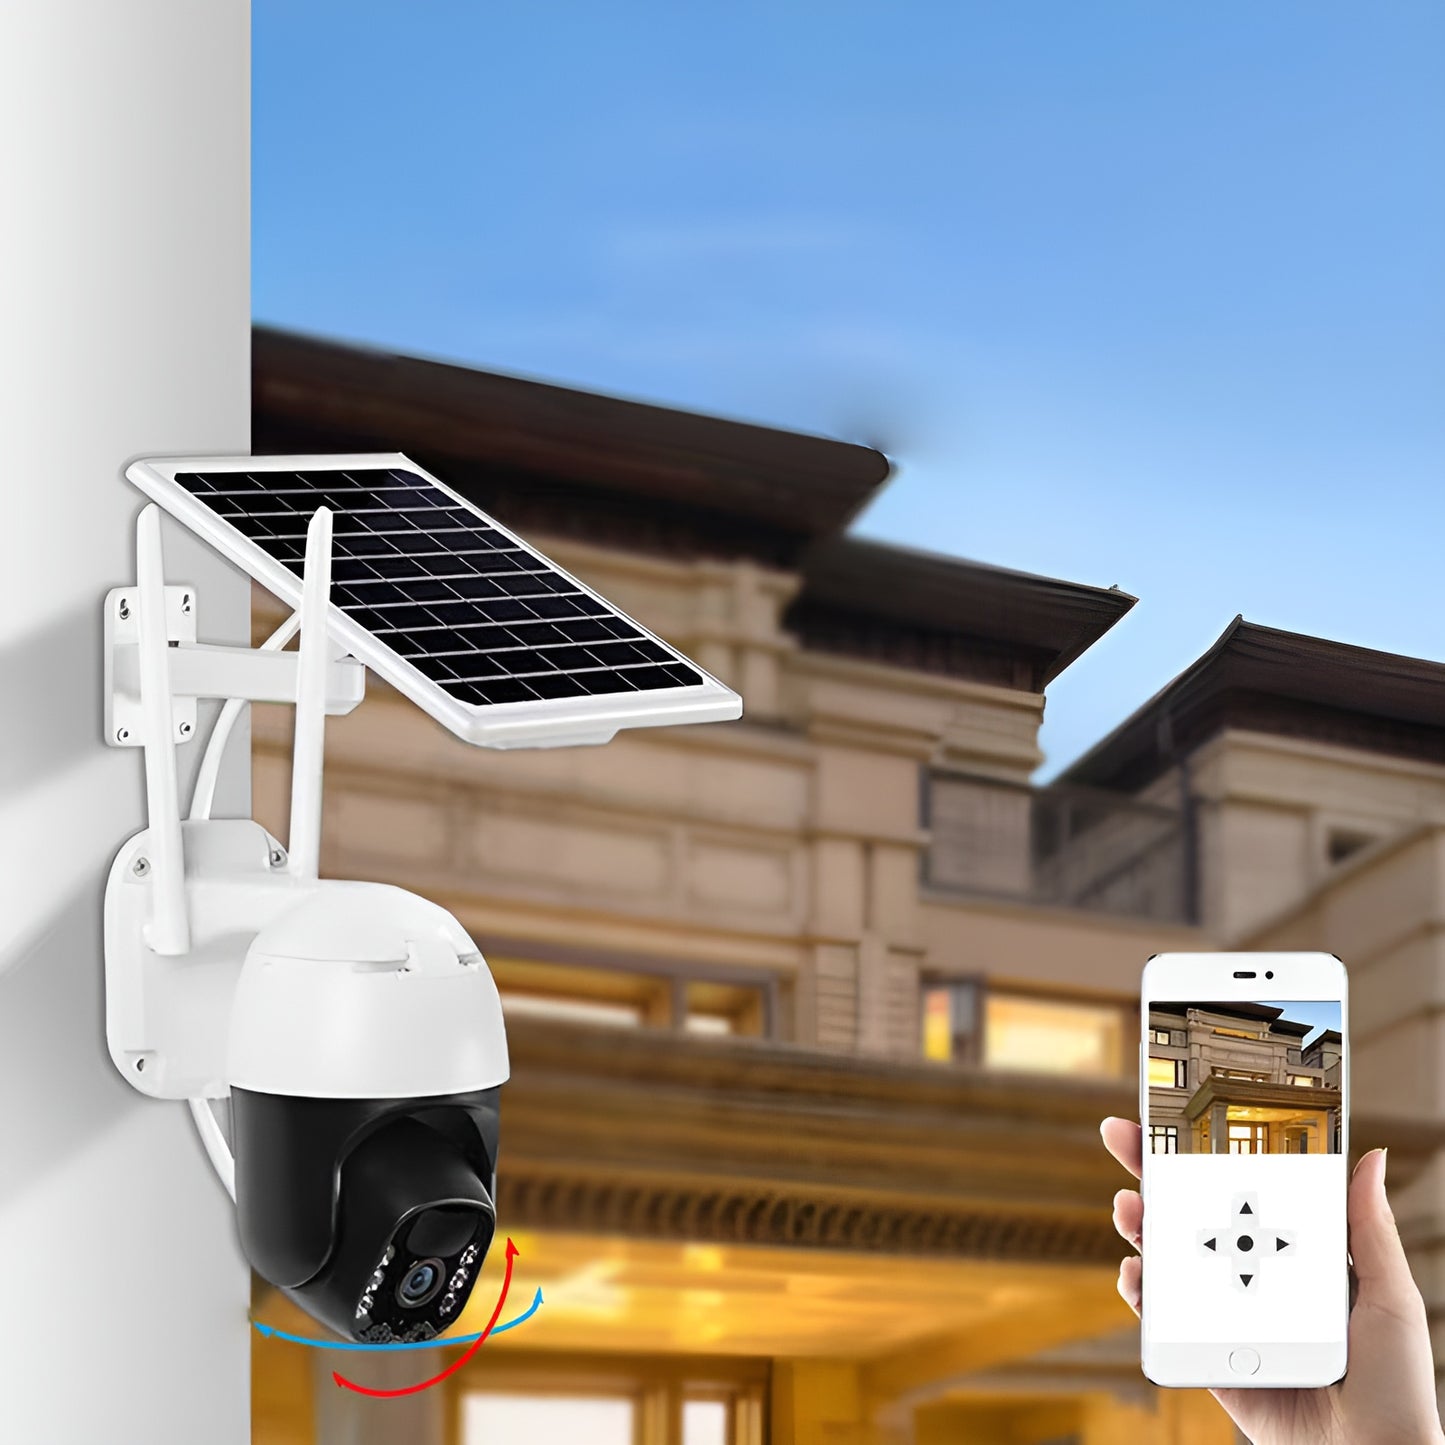 LITLAMP™ Smart Wireless Solar Surveillance Camera